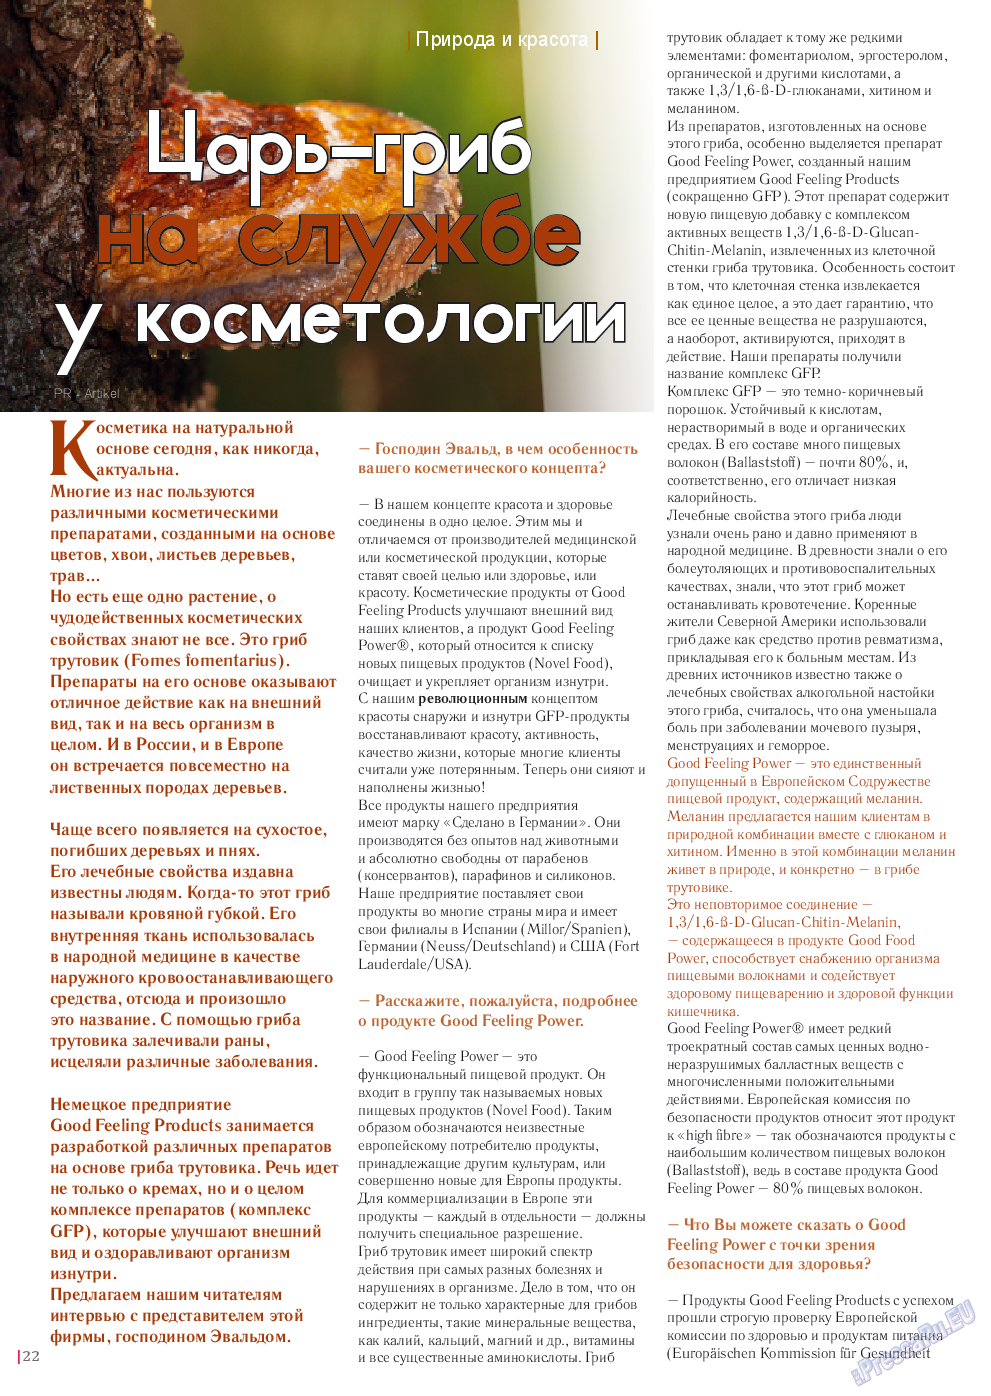 Катюша, журнал. 2016 №49 стр.22